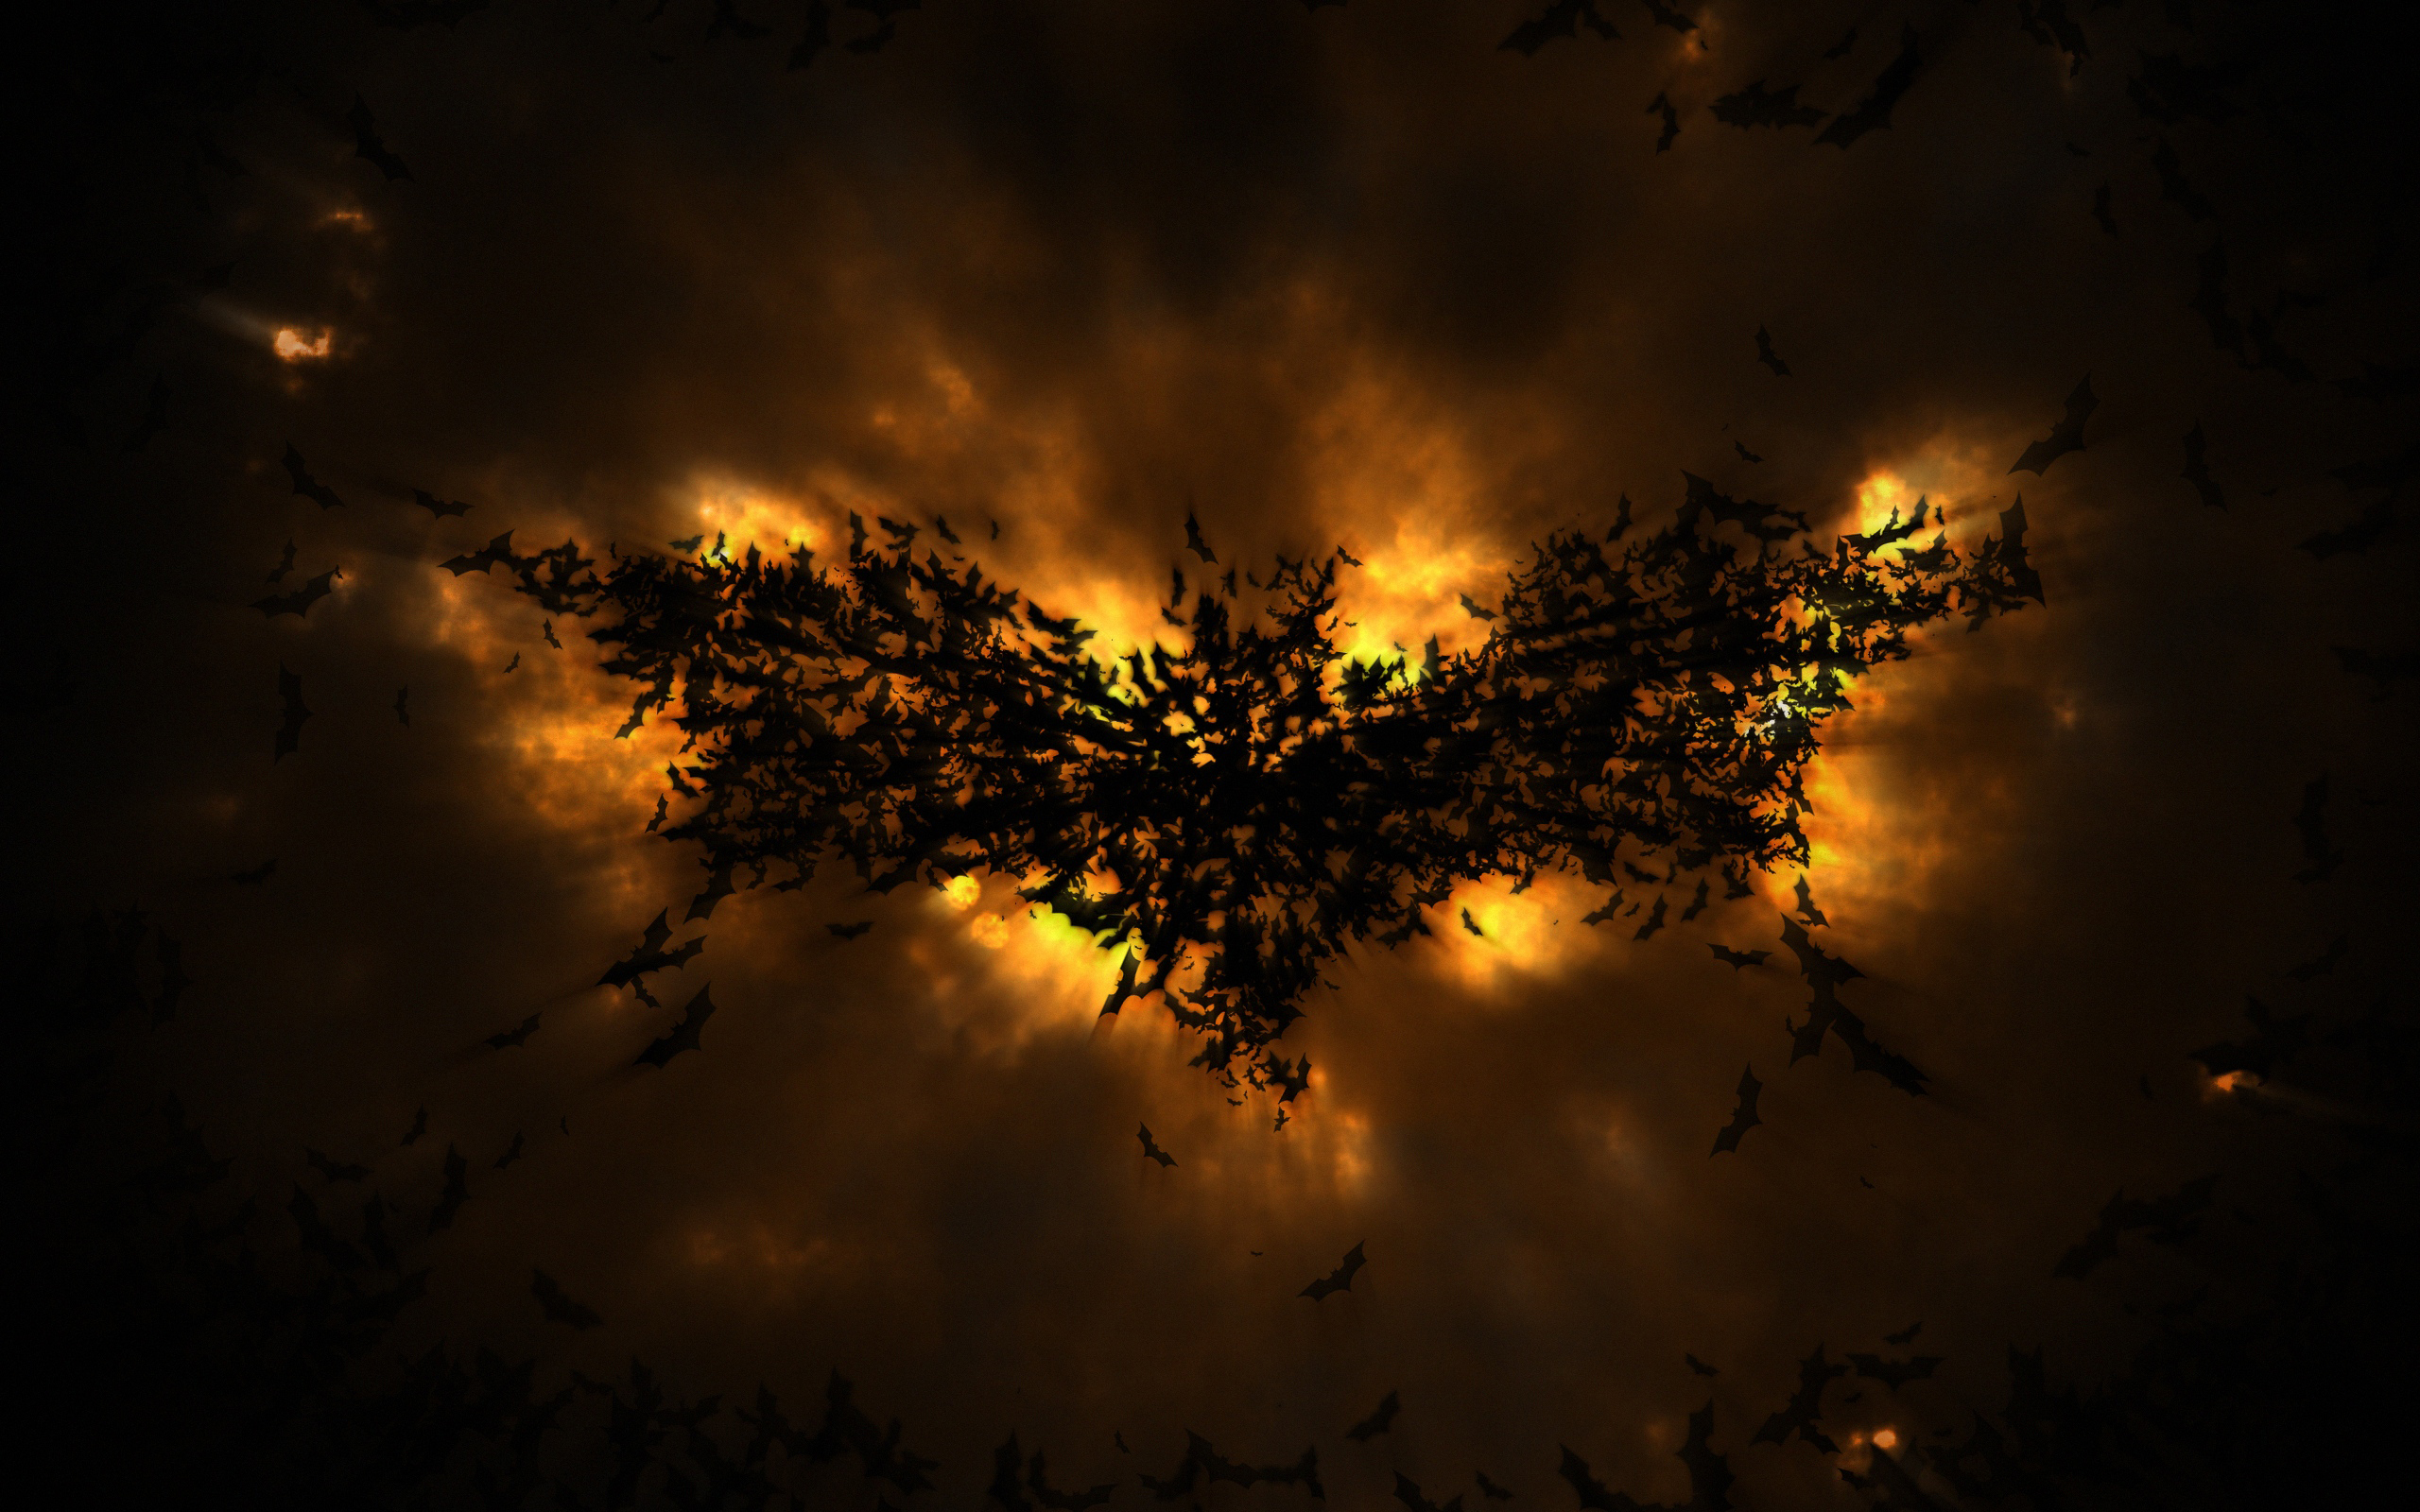 The Dark Knight Rises Batman Logo abstract wallpaper. Abstract HD wallpaper